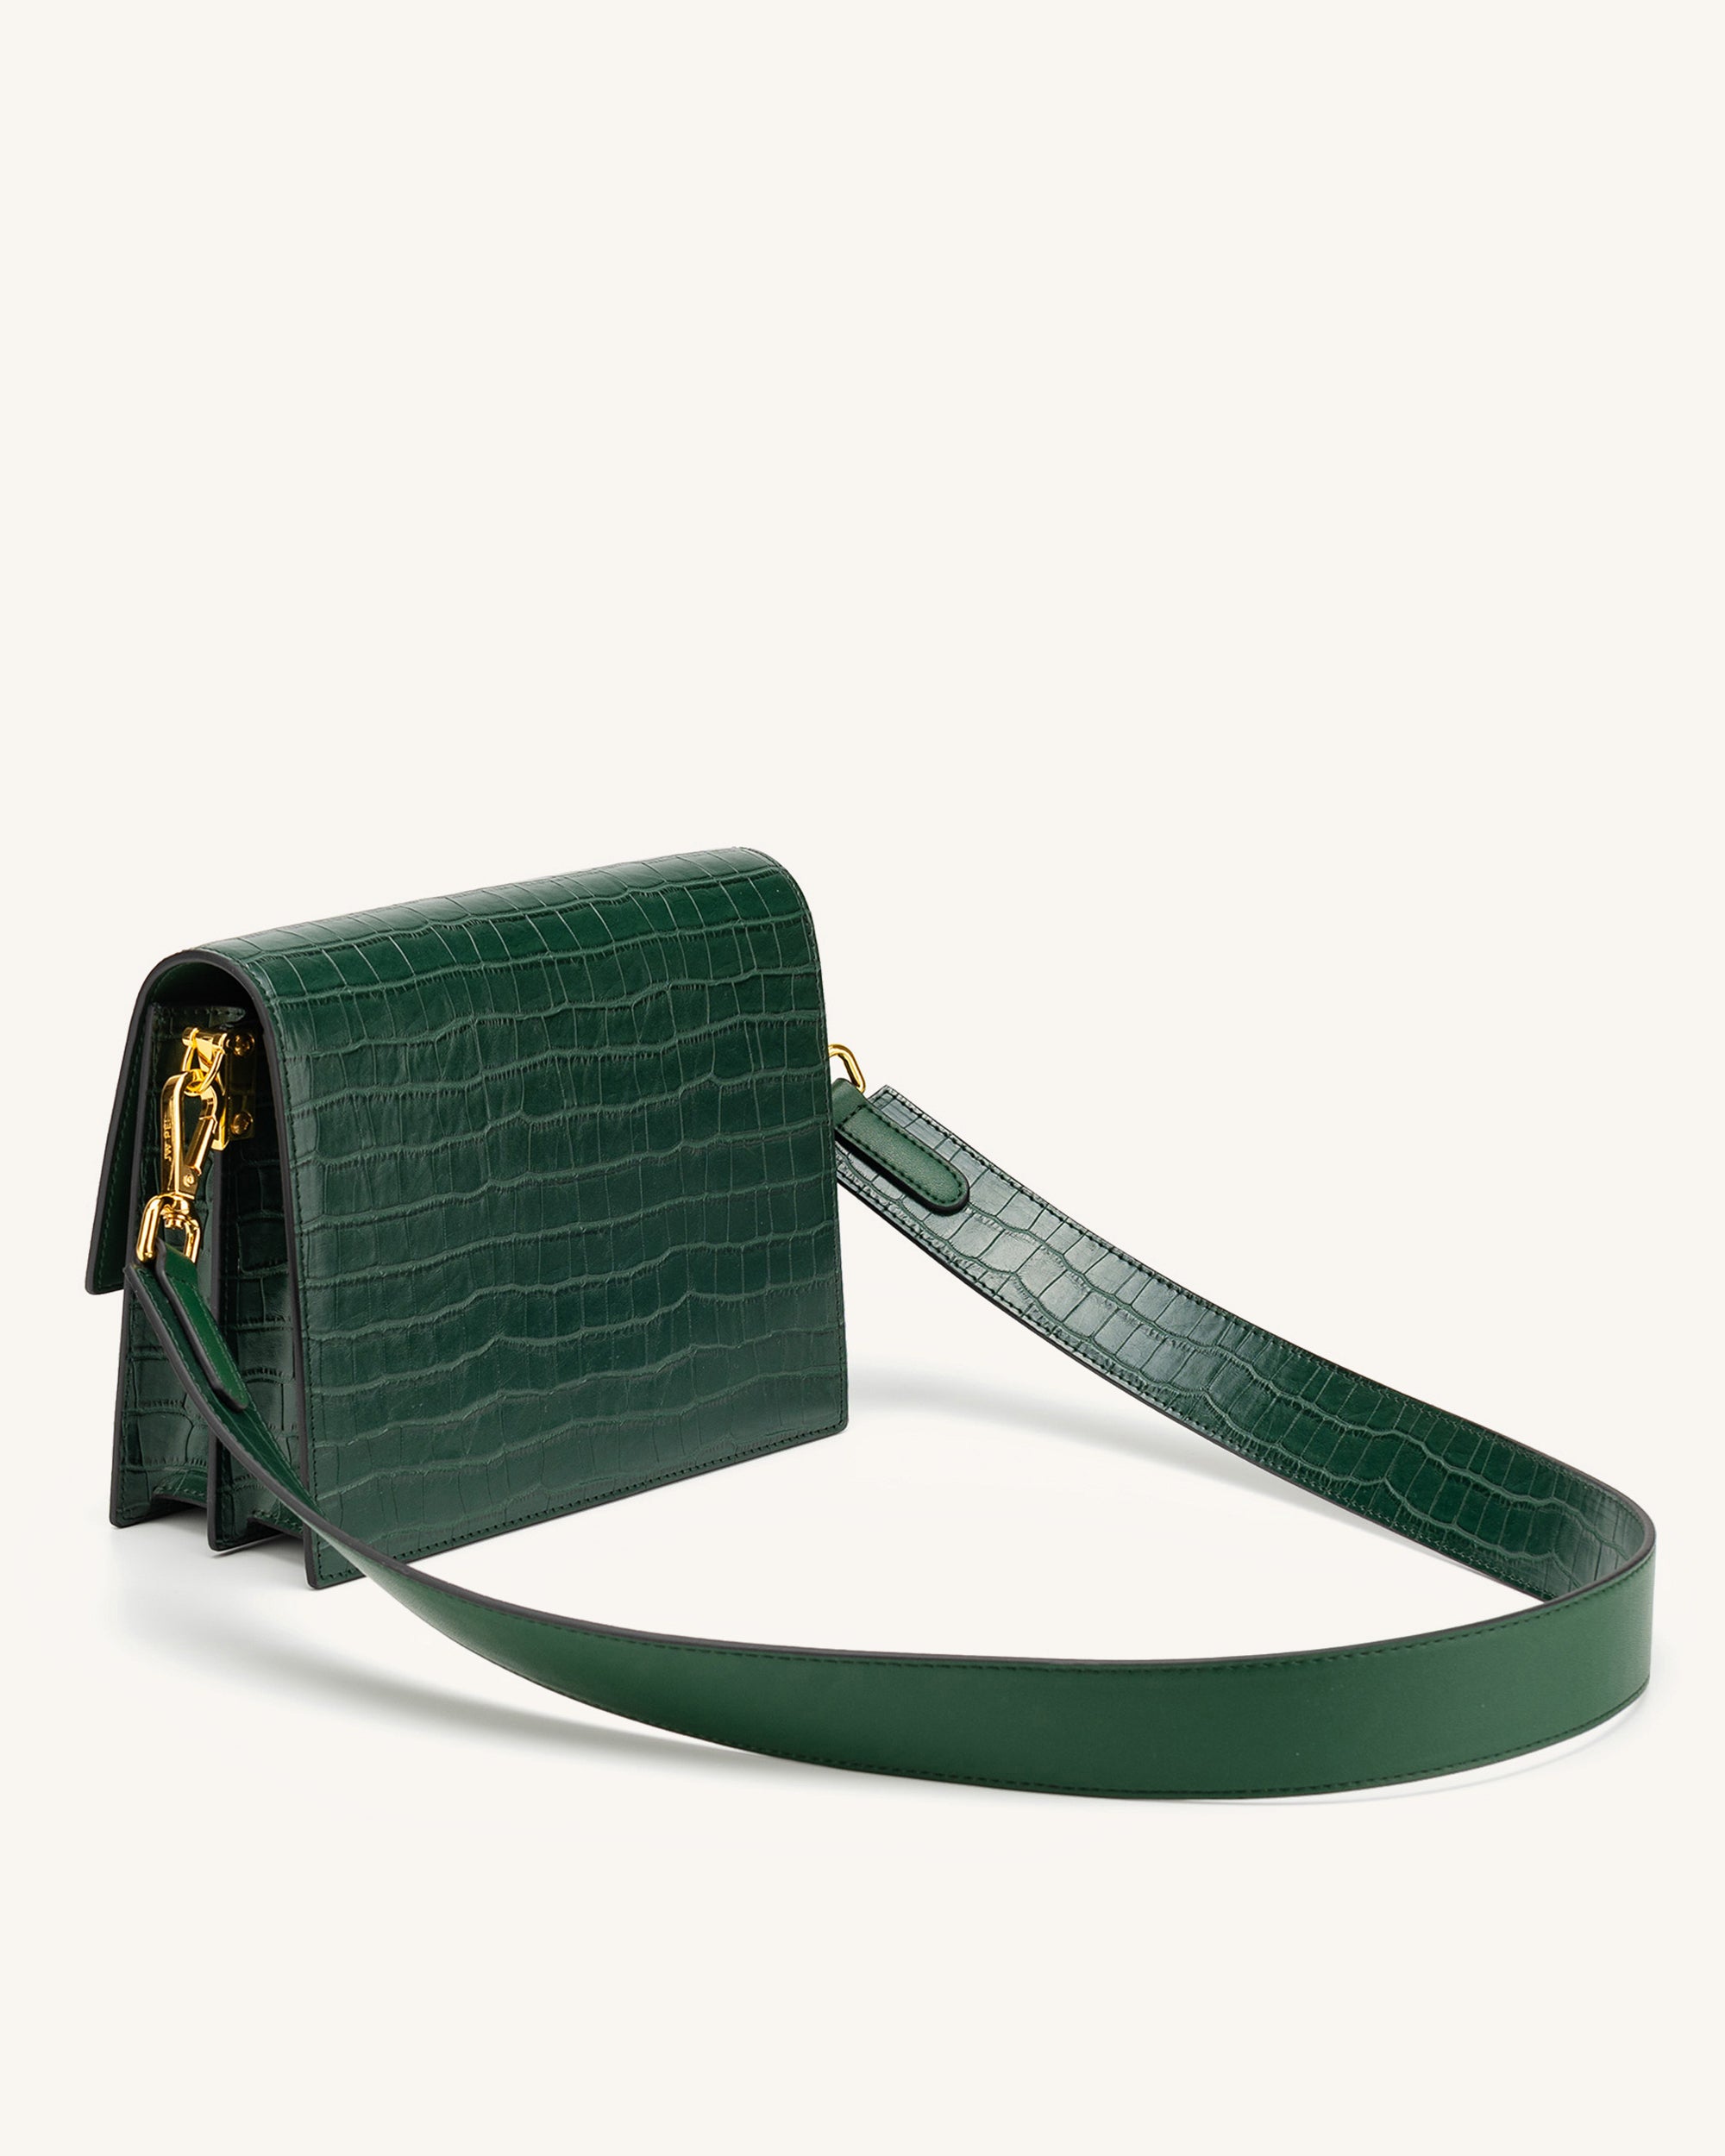 The Fae Top Handle Bag - Ivory Croc - Fashion Women Vegan Bag Online Shopping - JW Pei